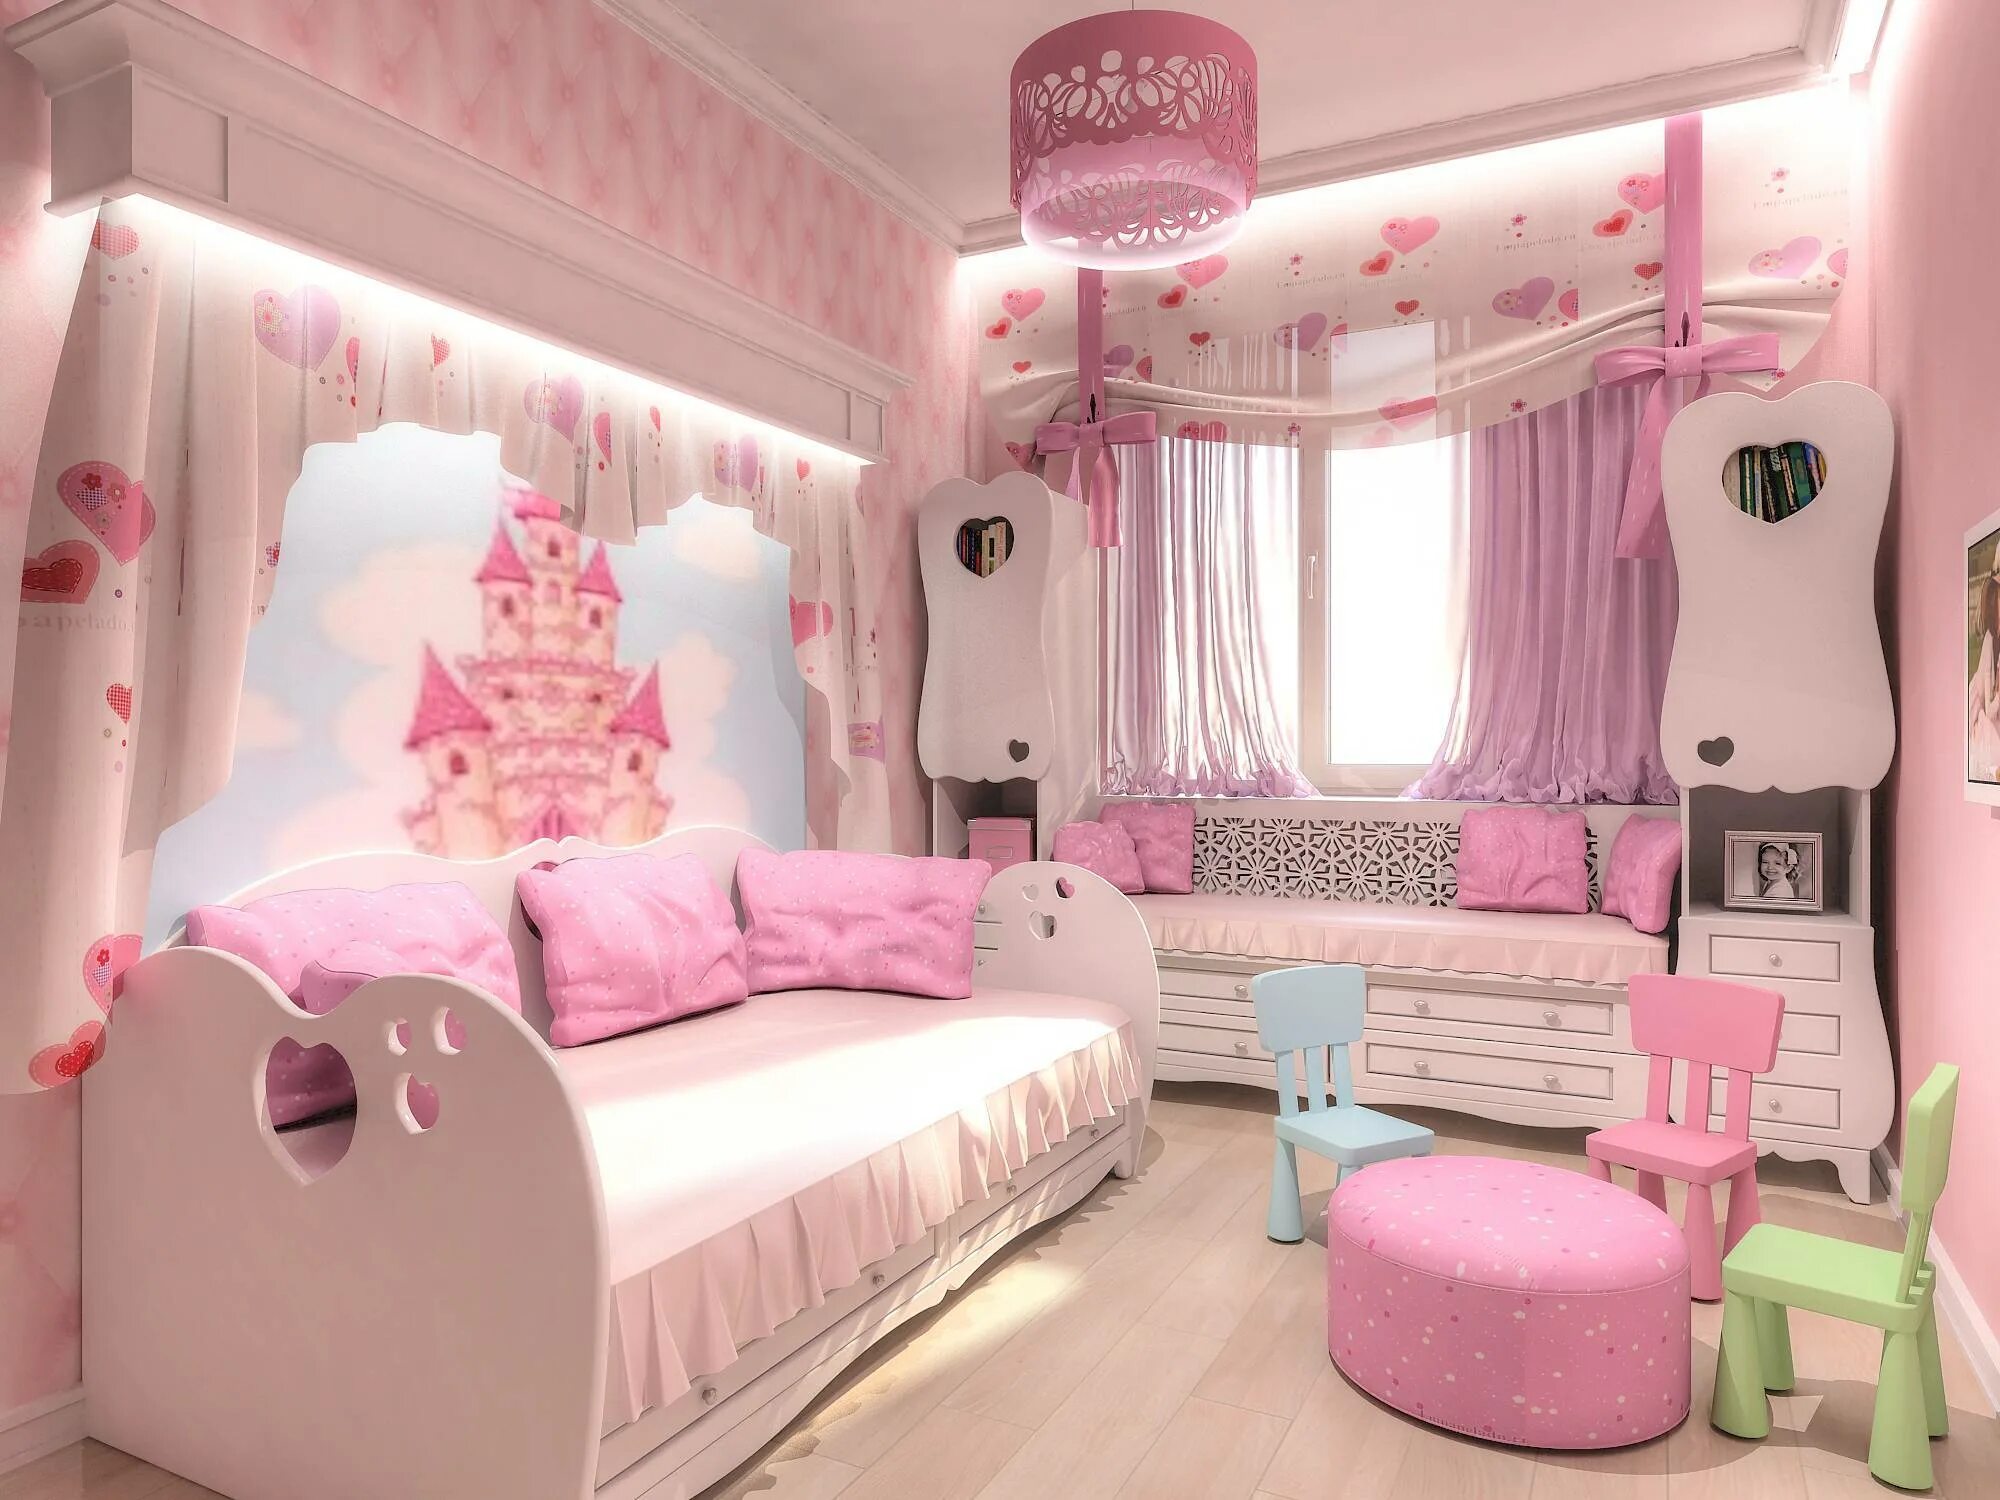 Красивая комната для девочки. Красивая детская комната девочке. Розовая комната для девочки. Комната для девочки розового цвета. Большая детская комната для девочки.